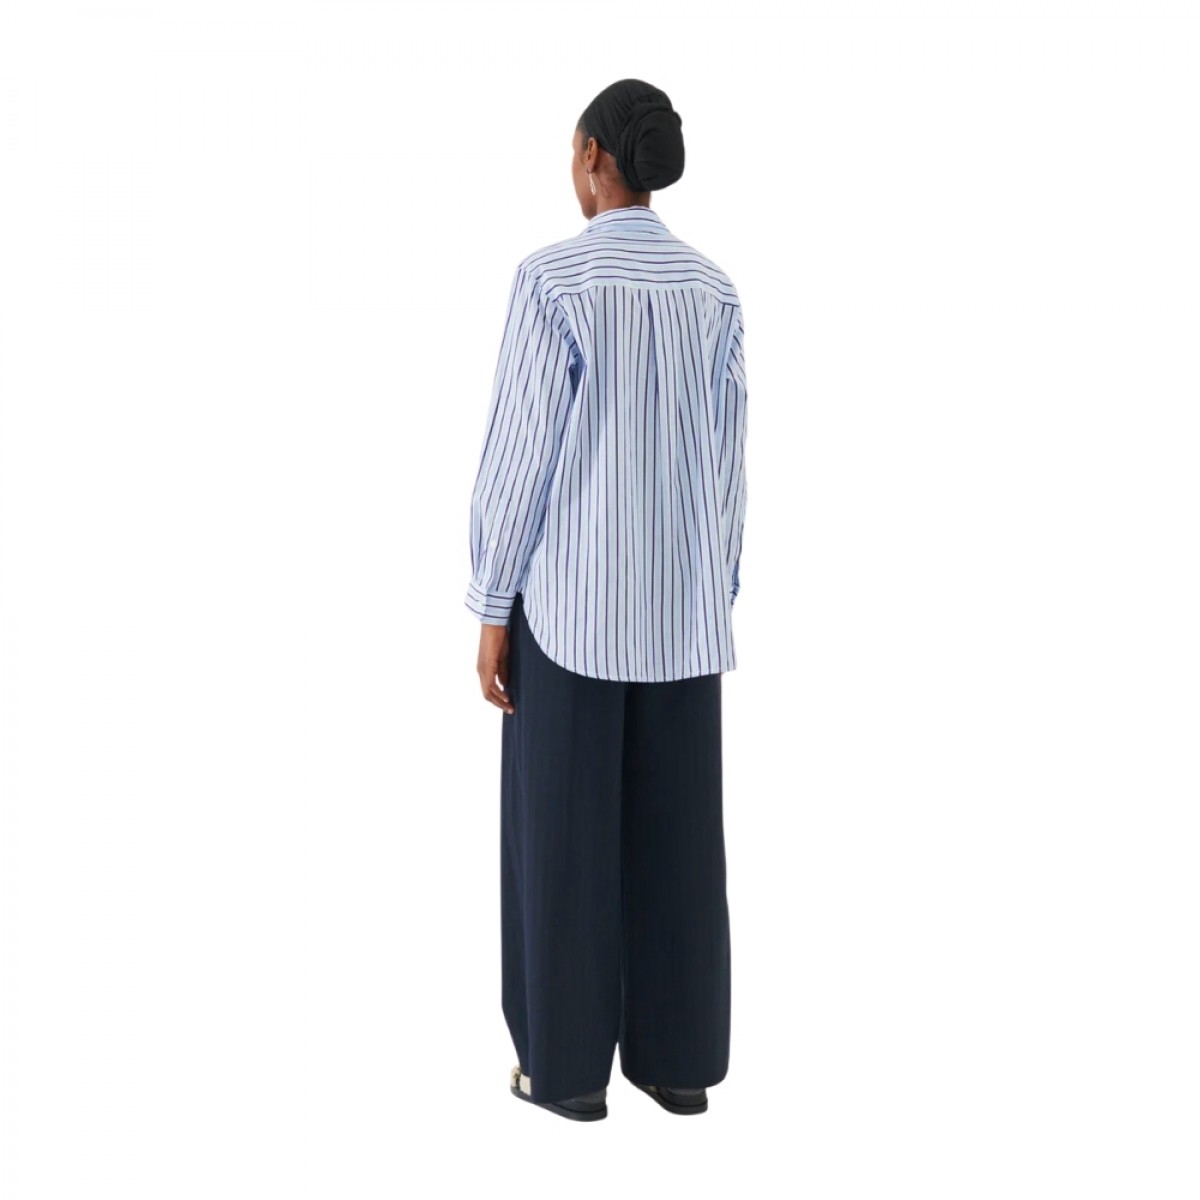 elotta shirt - blue stripe - model ryg